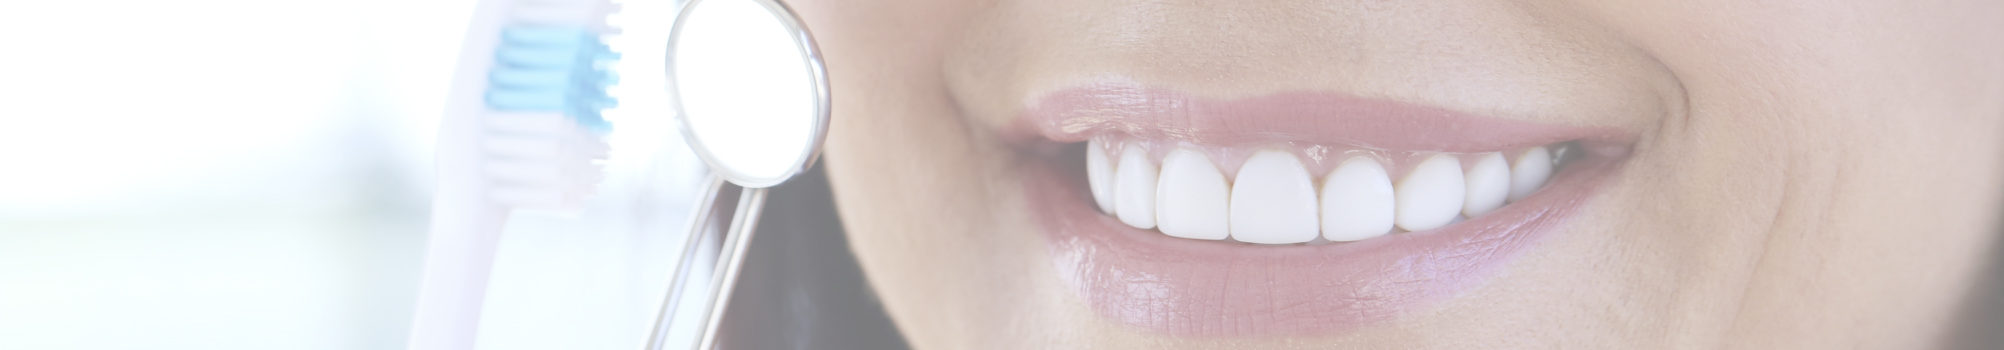 Your Teeth whitening Dentist in Croyden